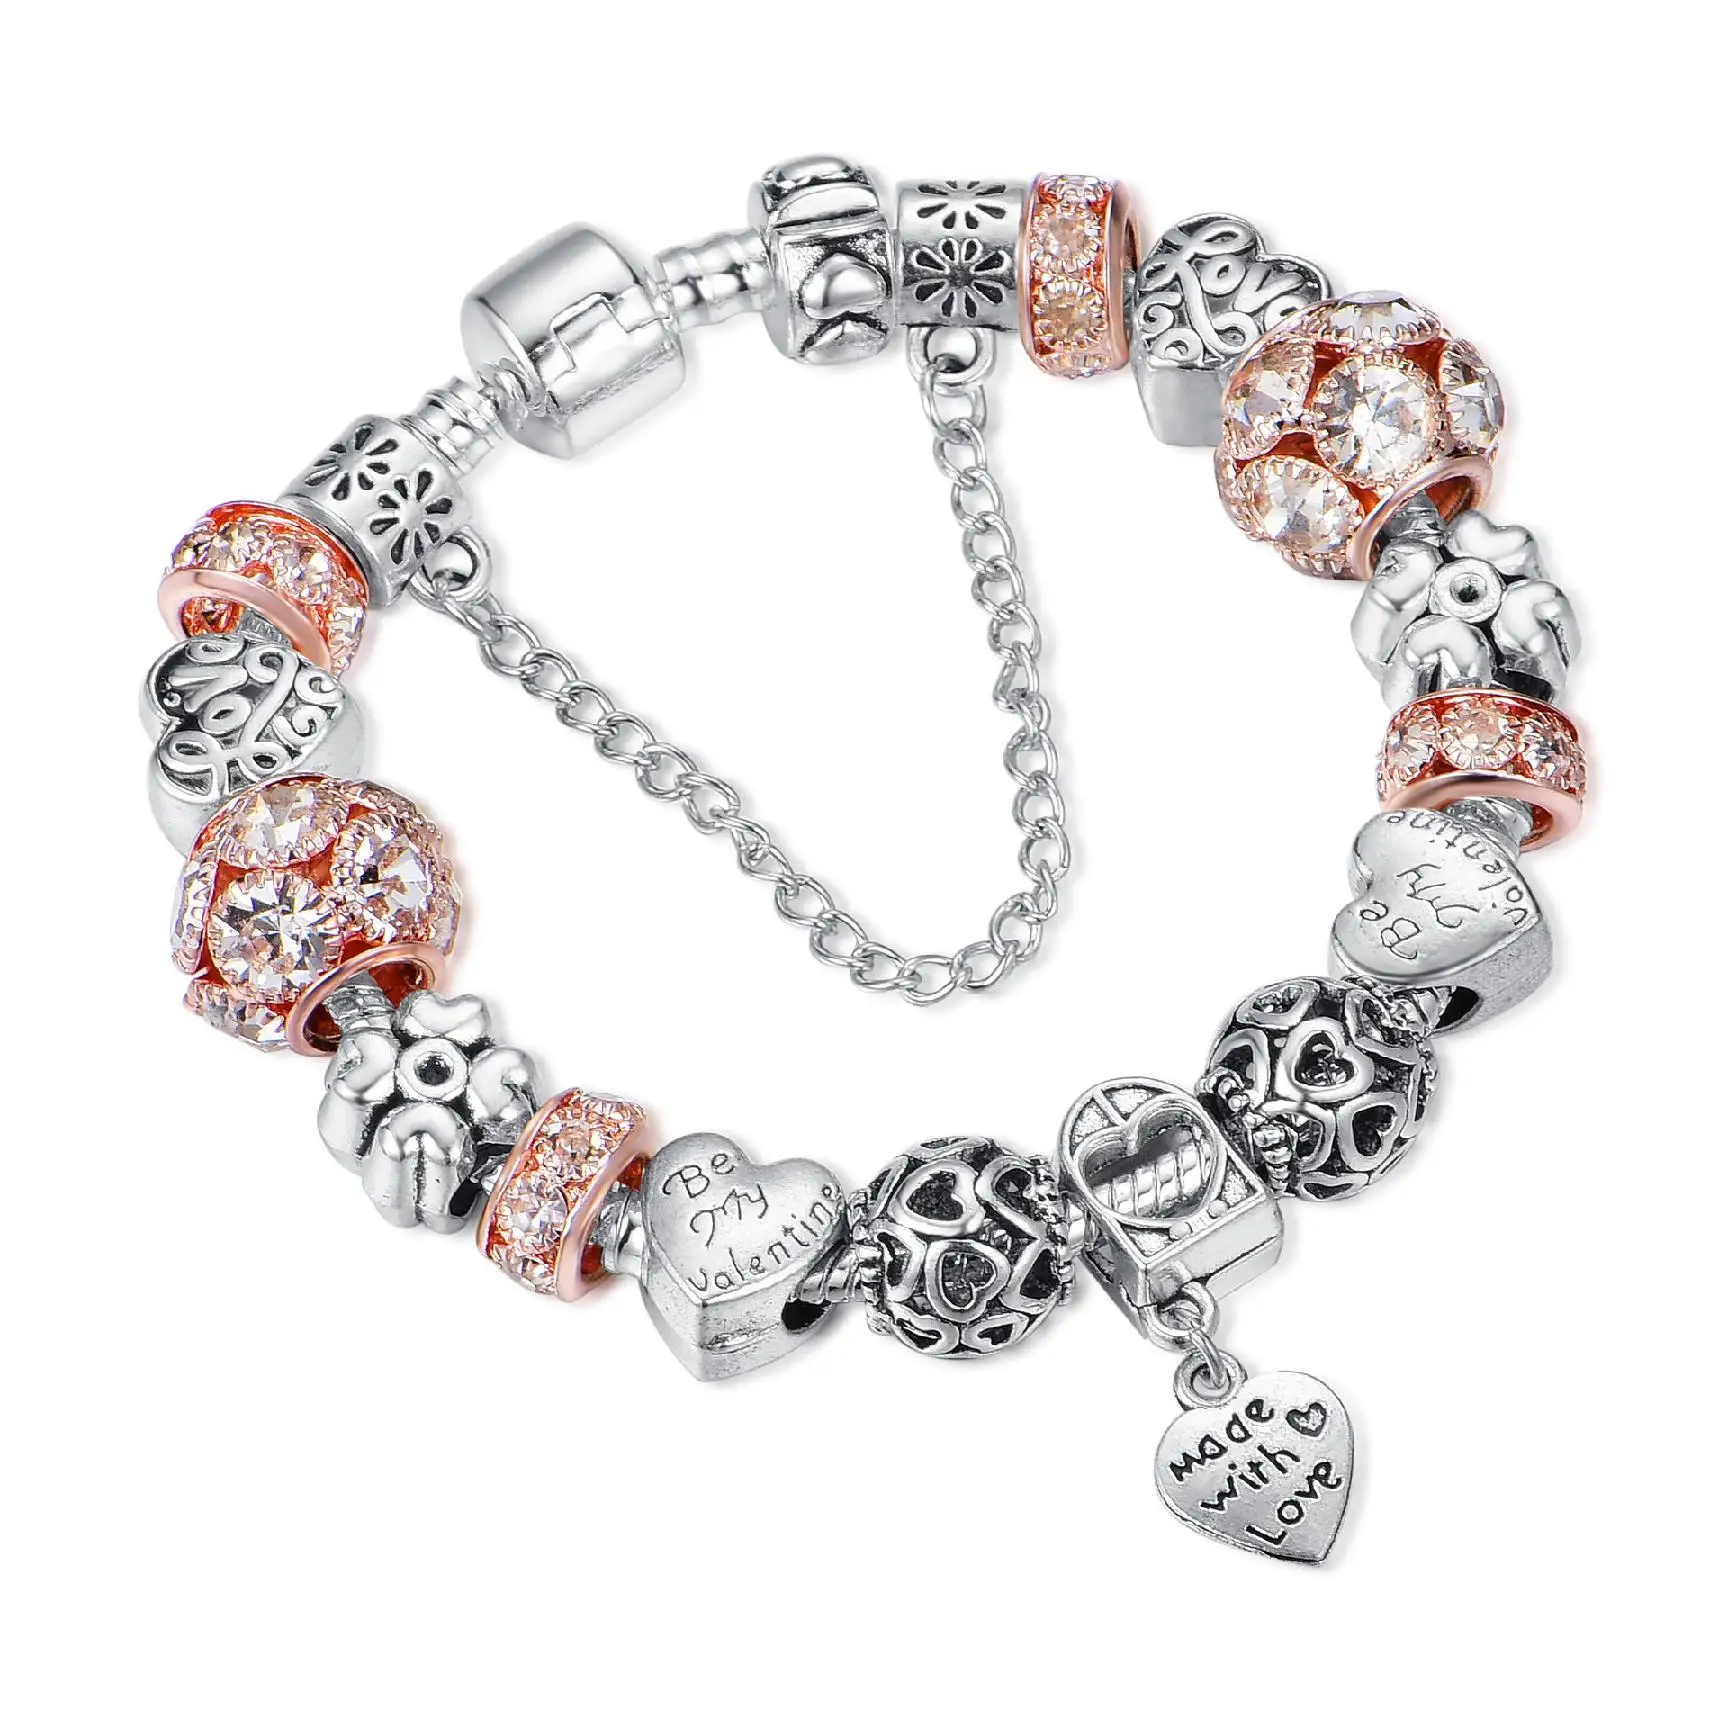 

Amazon Hot Sale Rose Gold Diamond Love Bracelet European And American Charming Women Hollow Heart Charm Bracelet, As picture showed